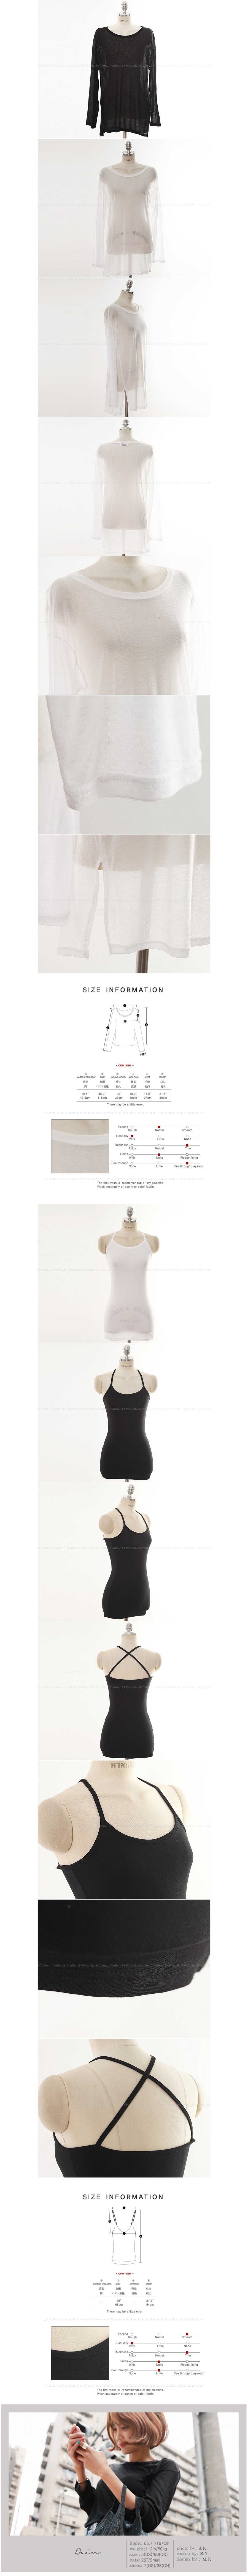 KOREA 100% Tencel Organic T-shirt+Cross Back Tank Top 2 Pieces Set #White One Size(Free) [Free Shipping]